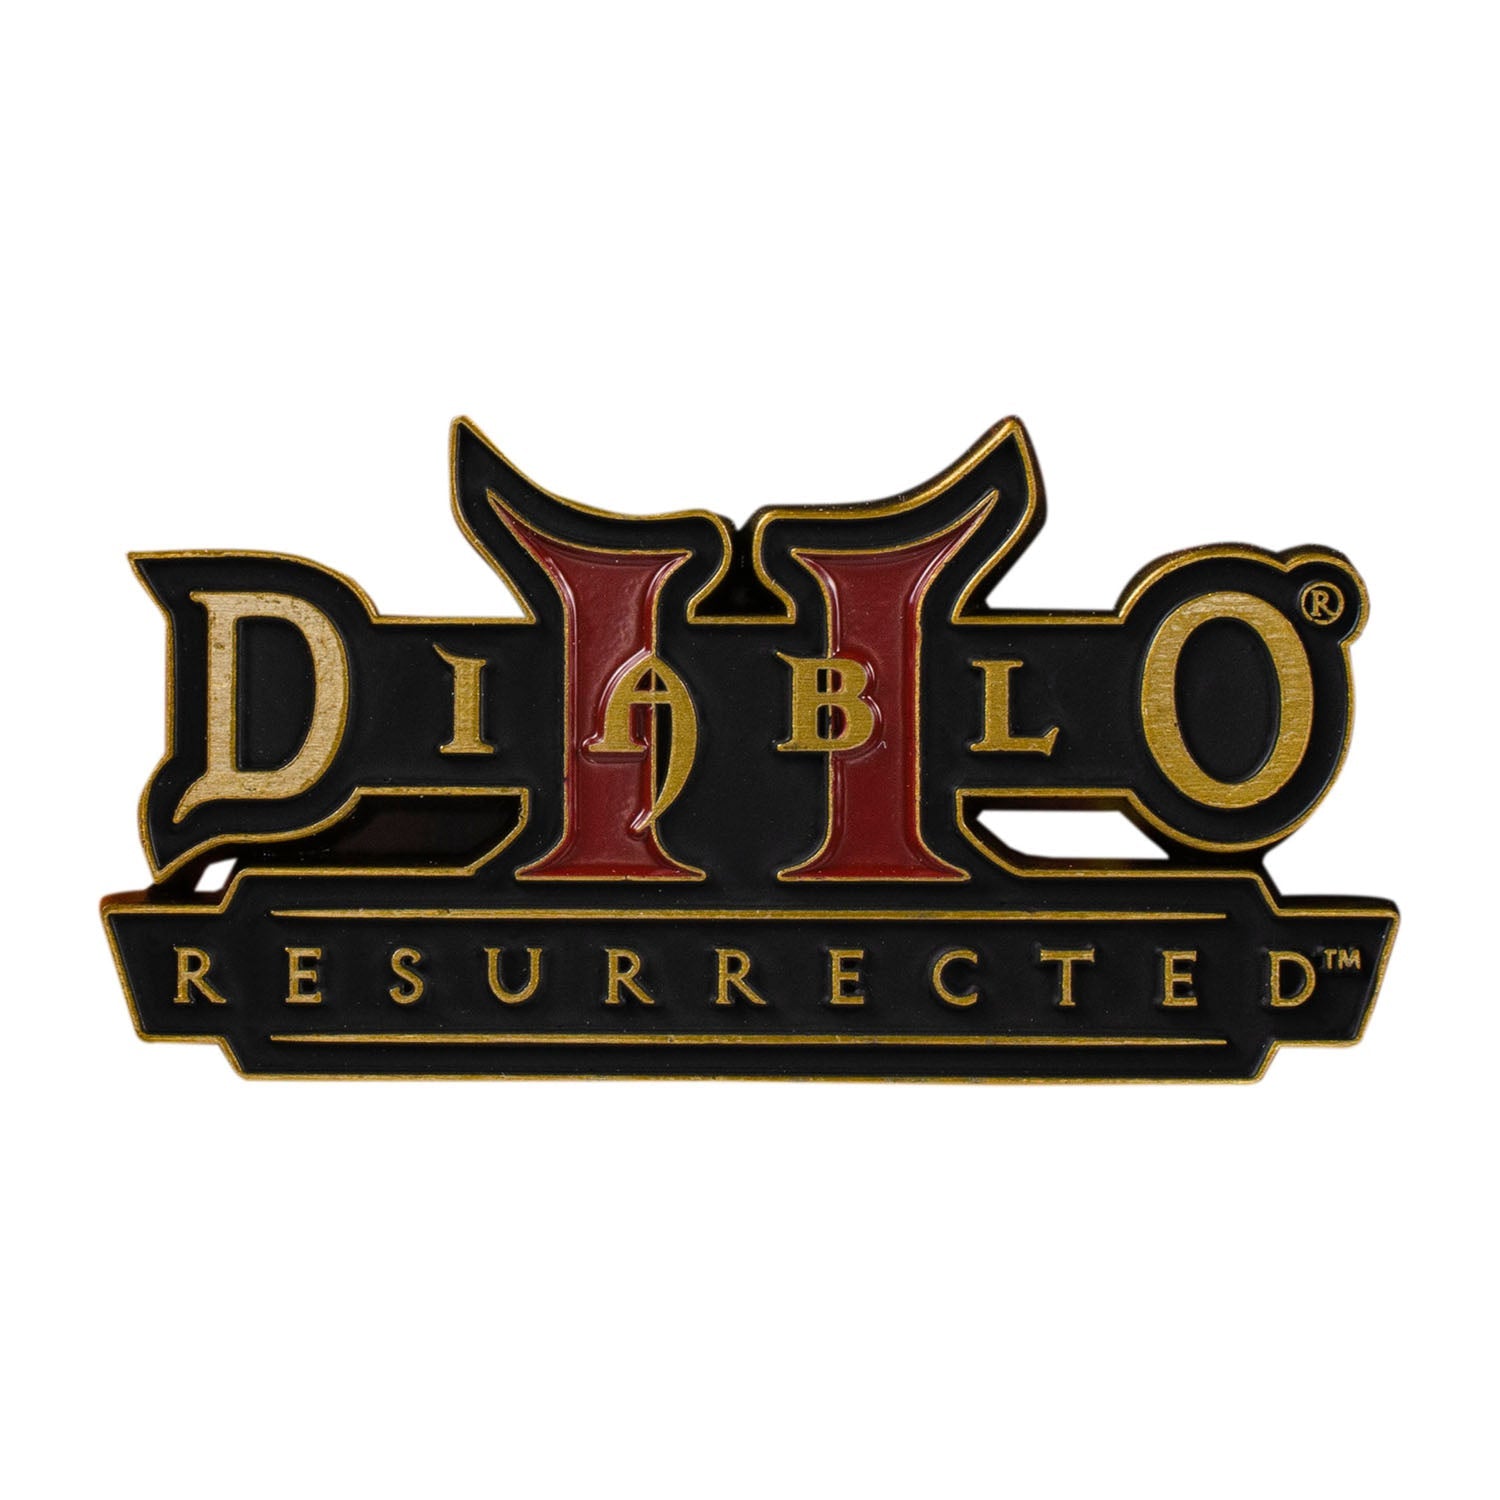 Diablo II: Resurrected Collector's Edition Pin in Black - Pin View